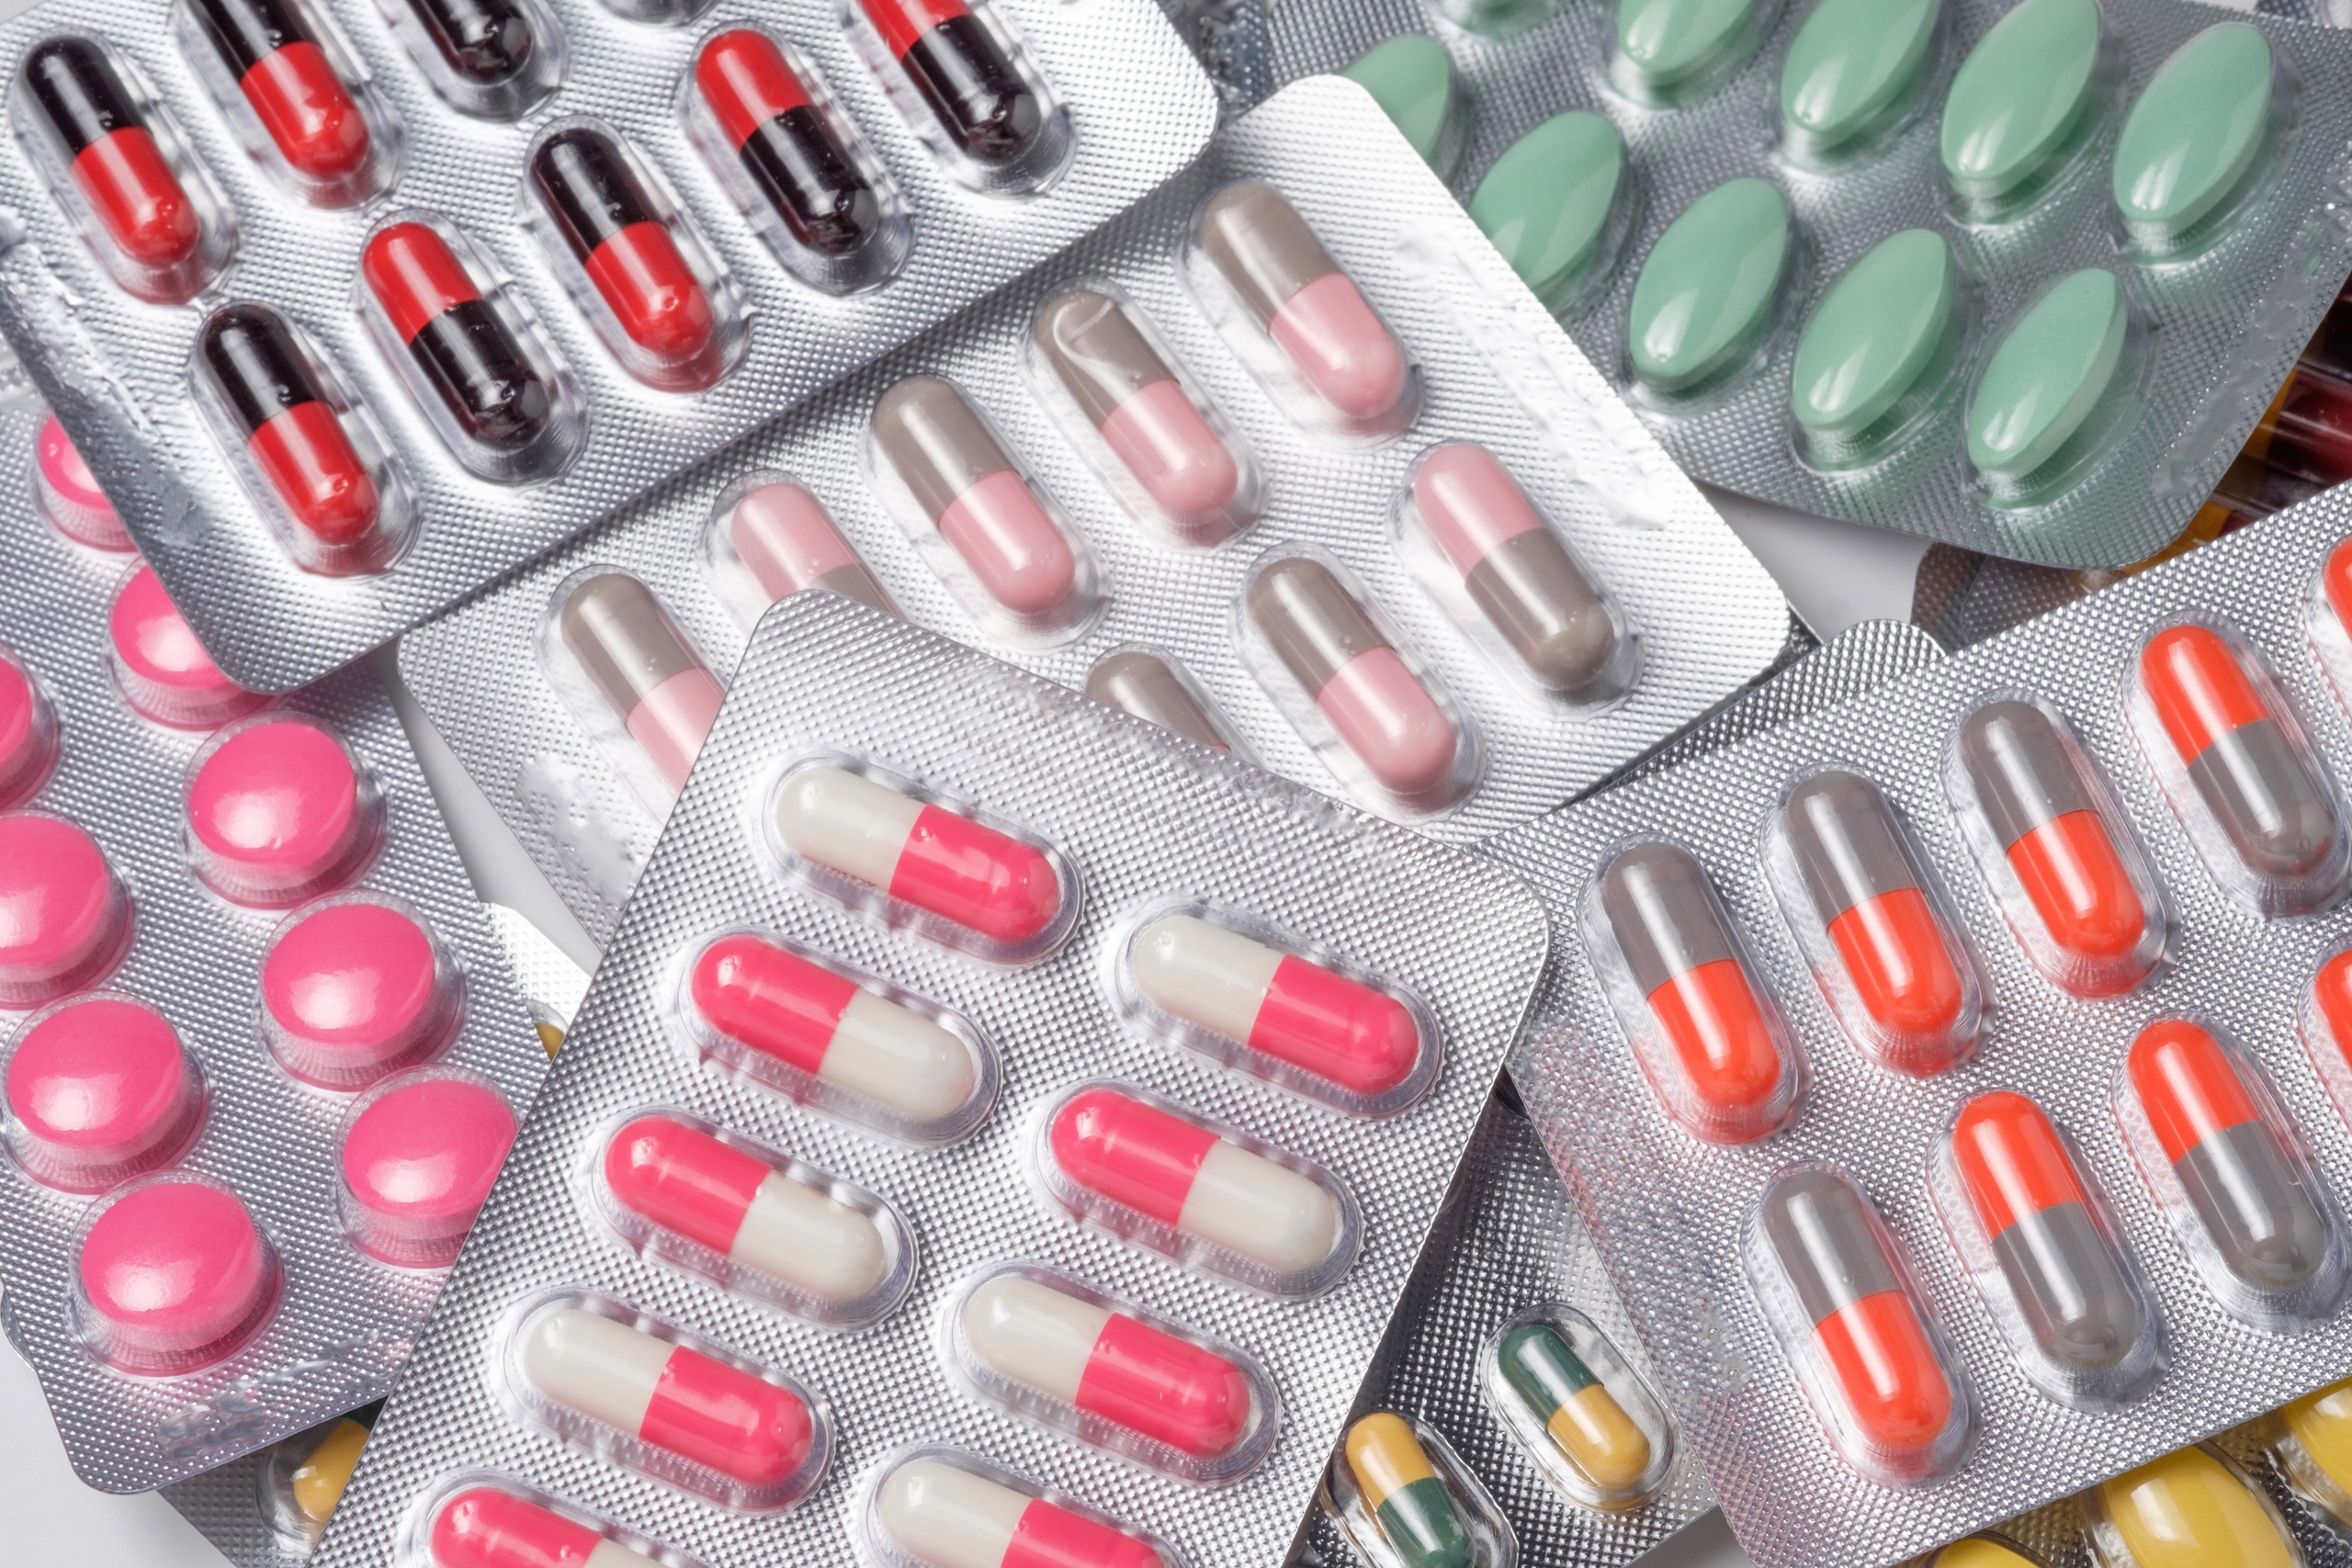 Антибиотики - не зло, заявил глава Минздрава Карелии